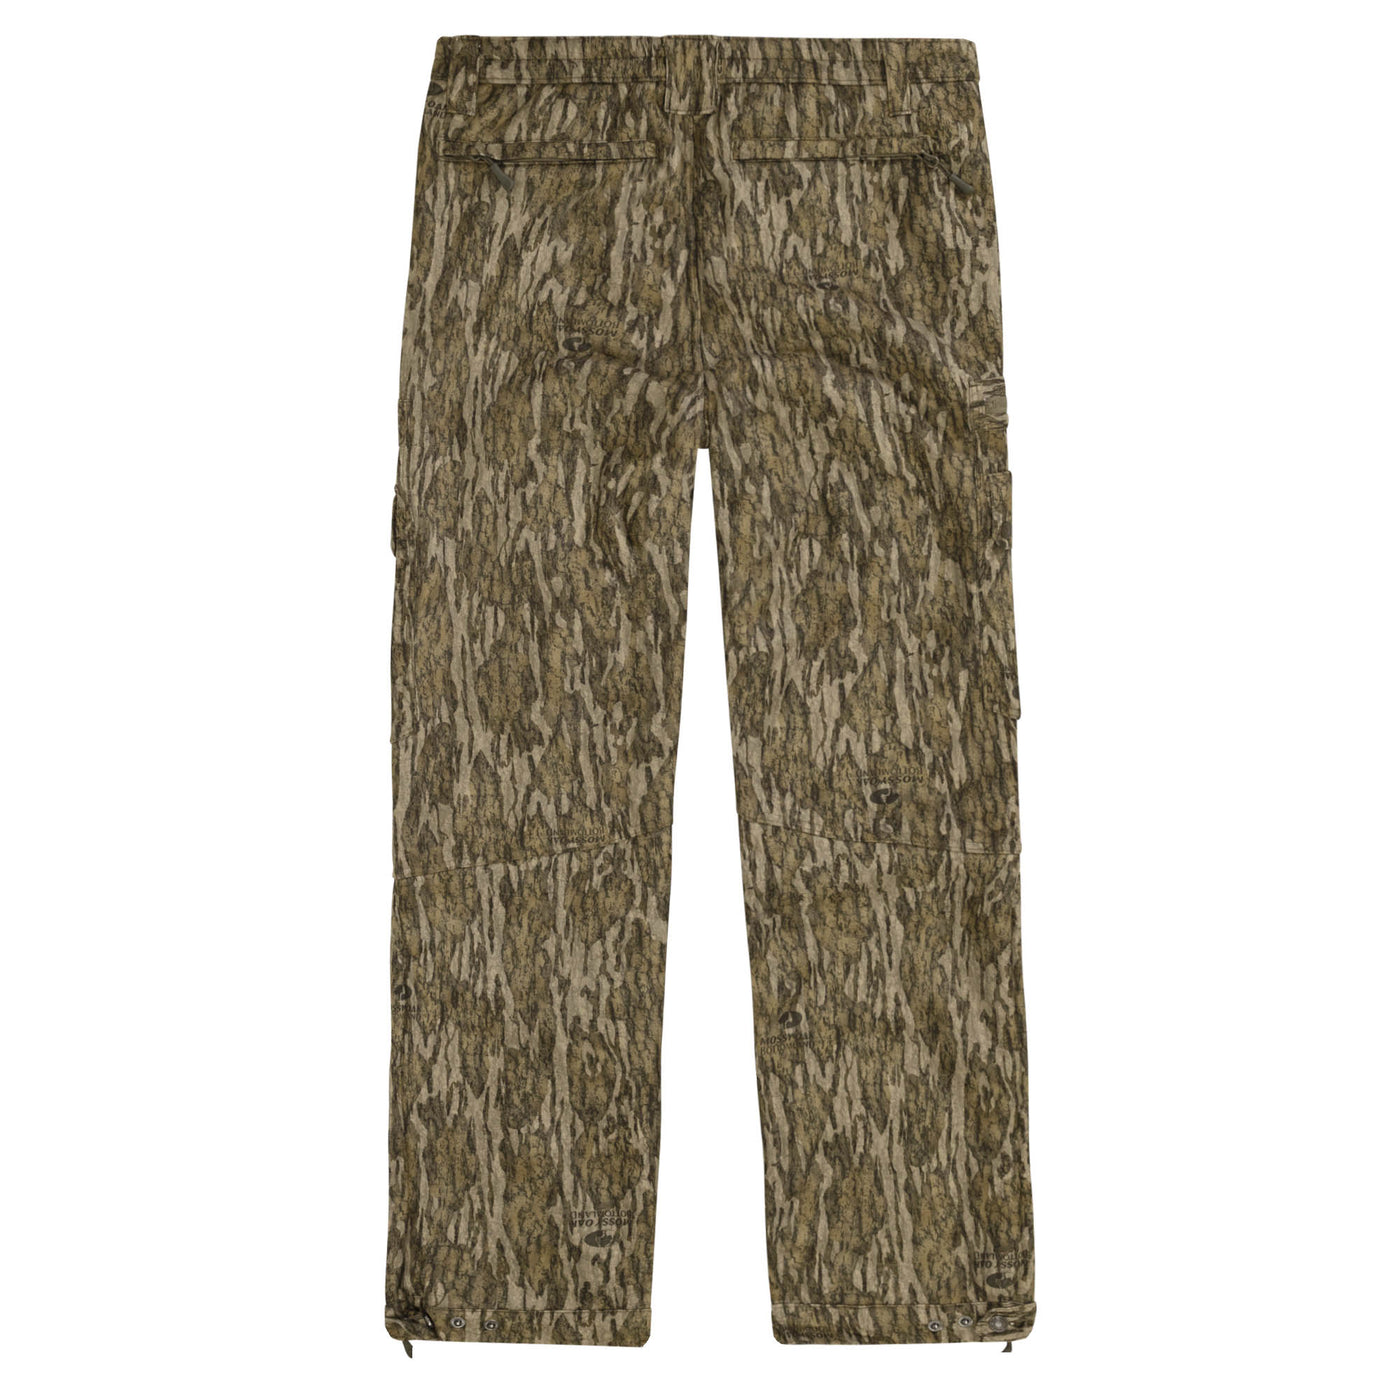 Mossy Oak Sherpa 2.0 Lined Pant